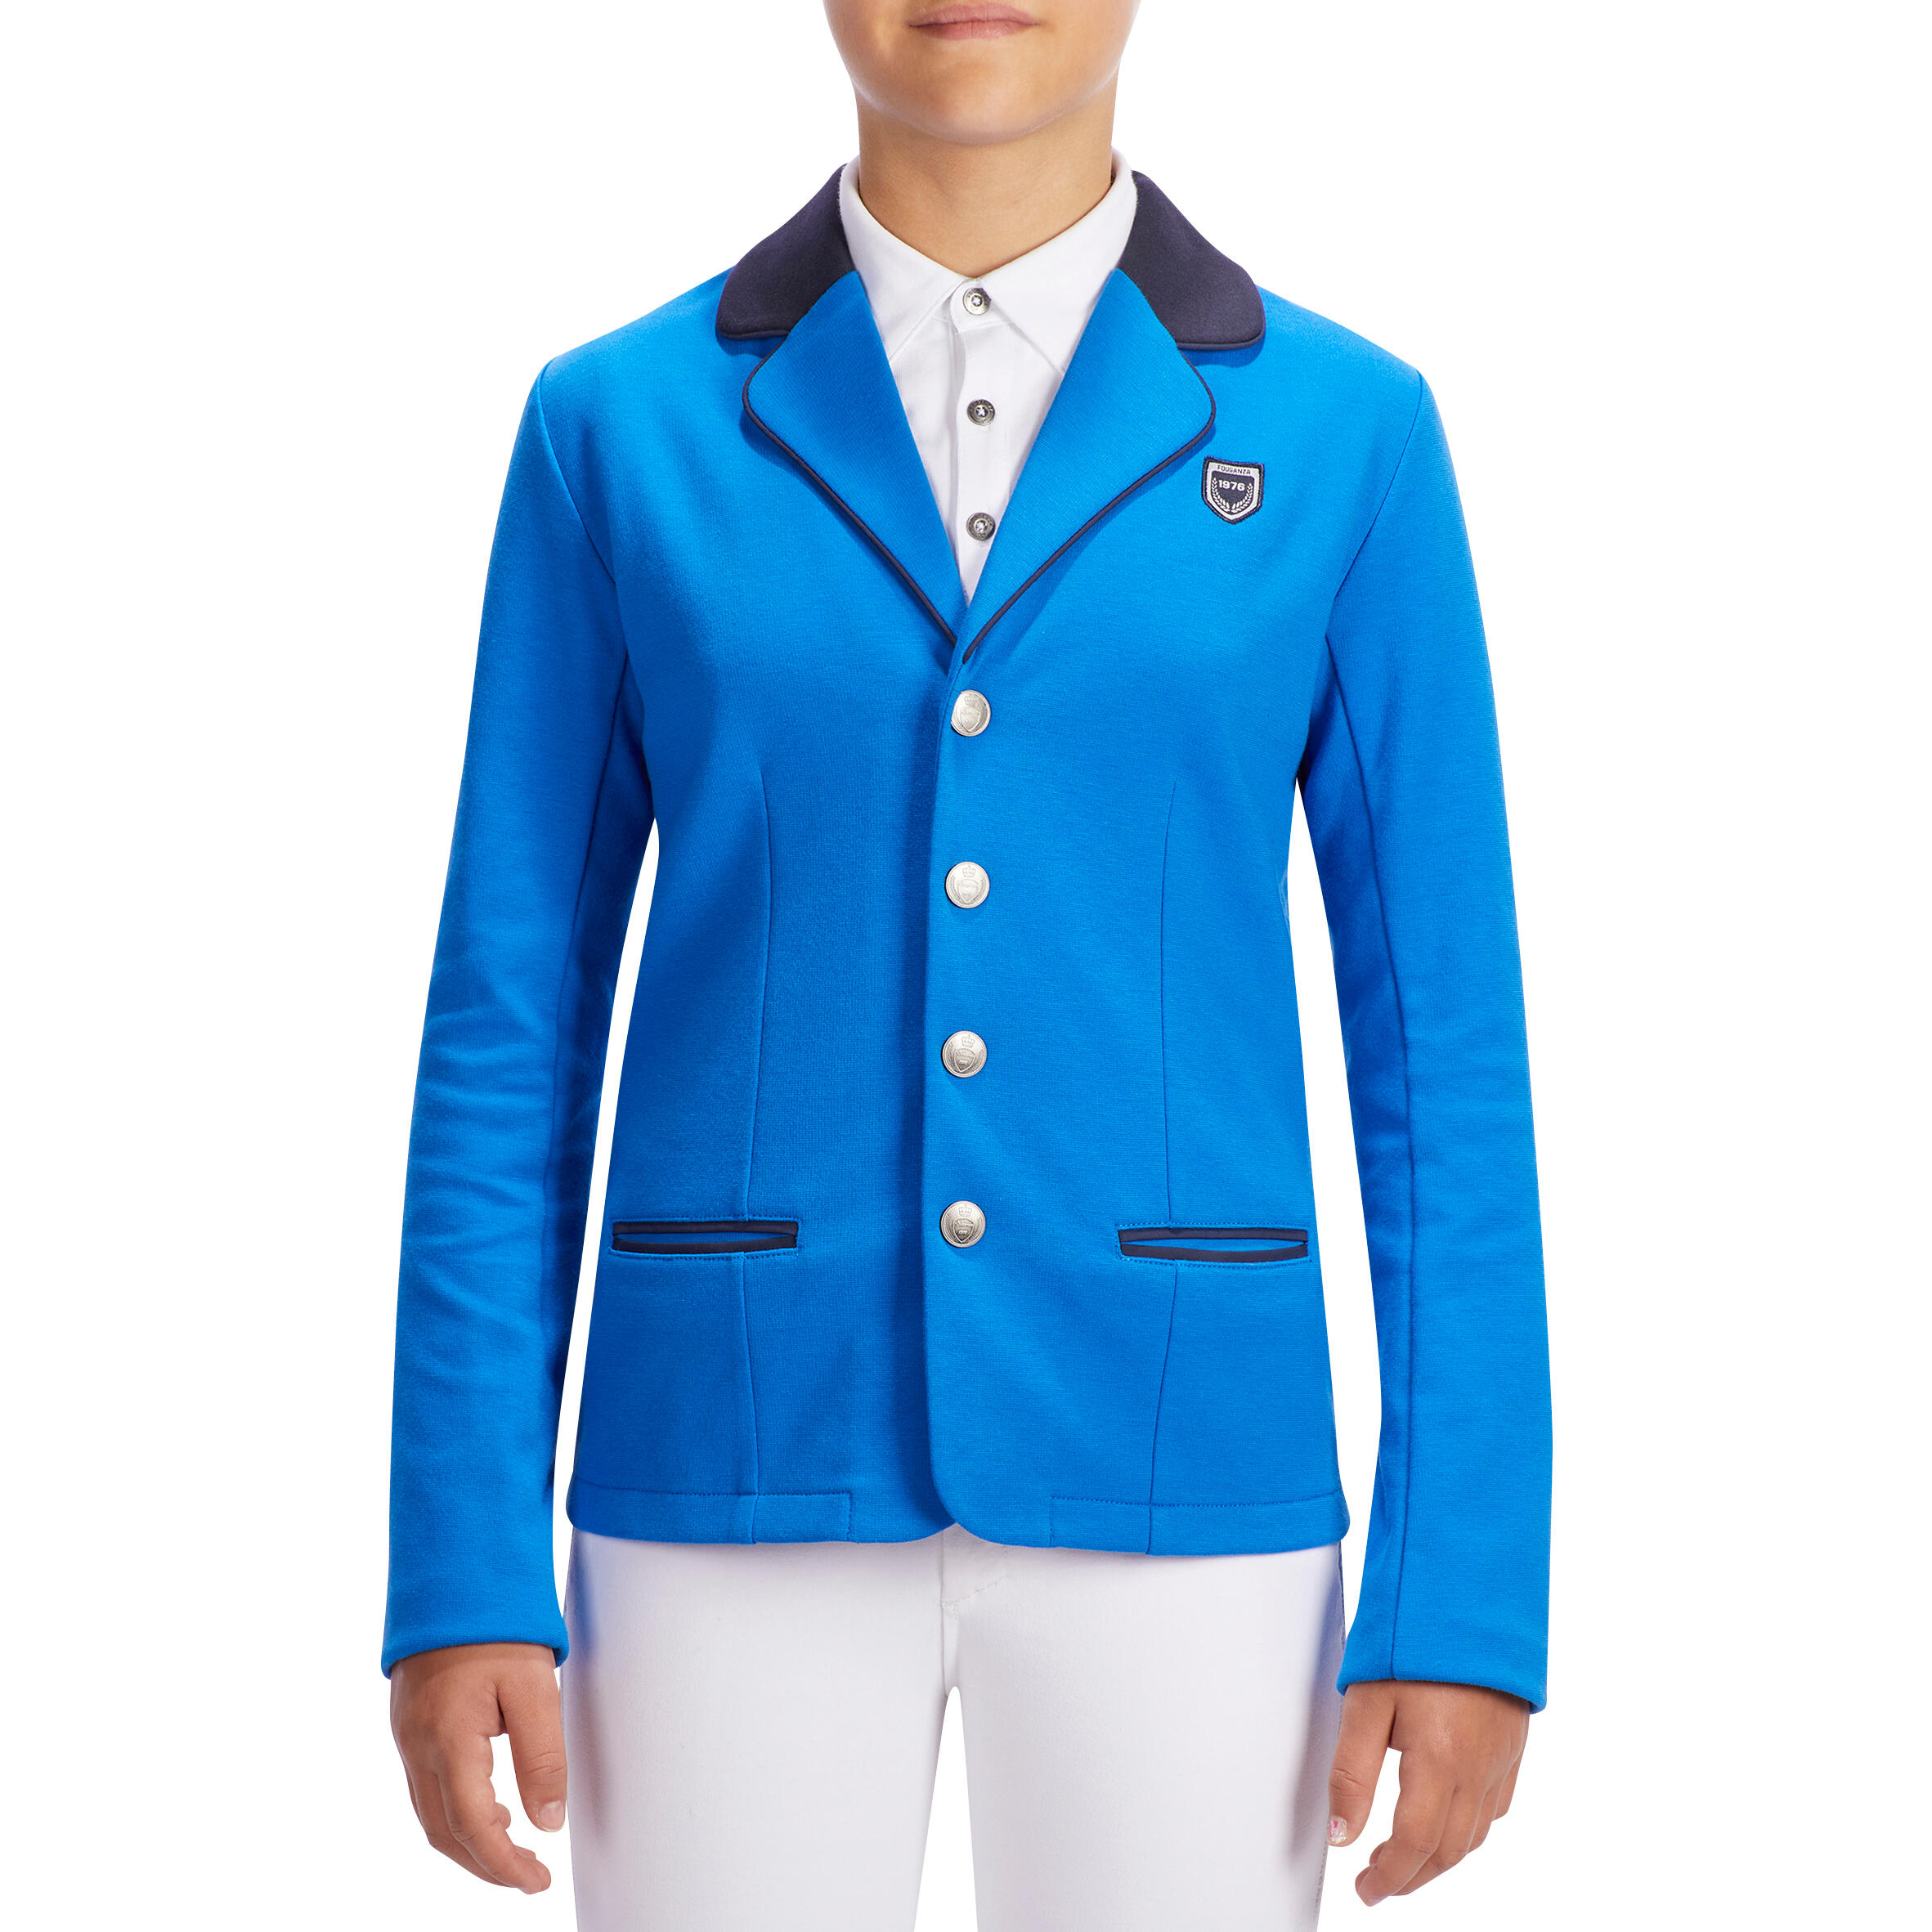 Comp 100 Kids' Horse Riding Competition Jacket - Royal Blue 2/6